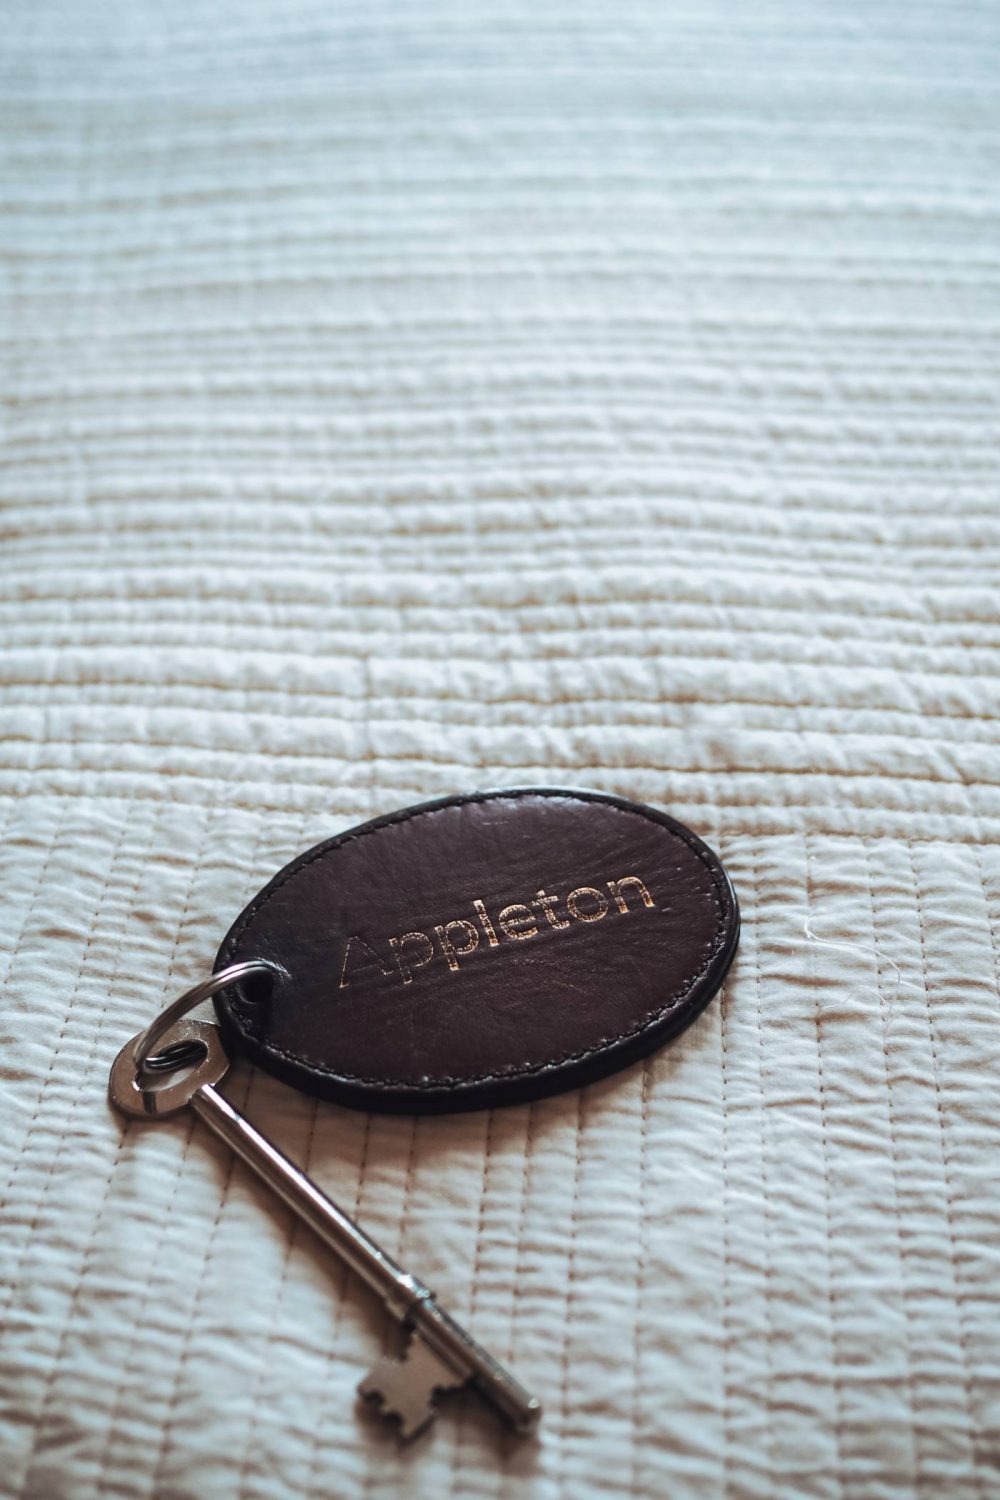 Door key on a leather keyring reading 'Appleton'